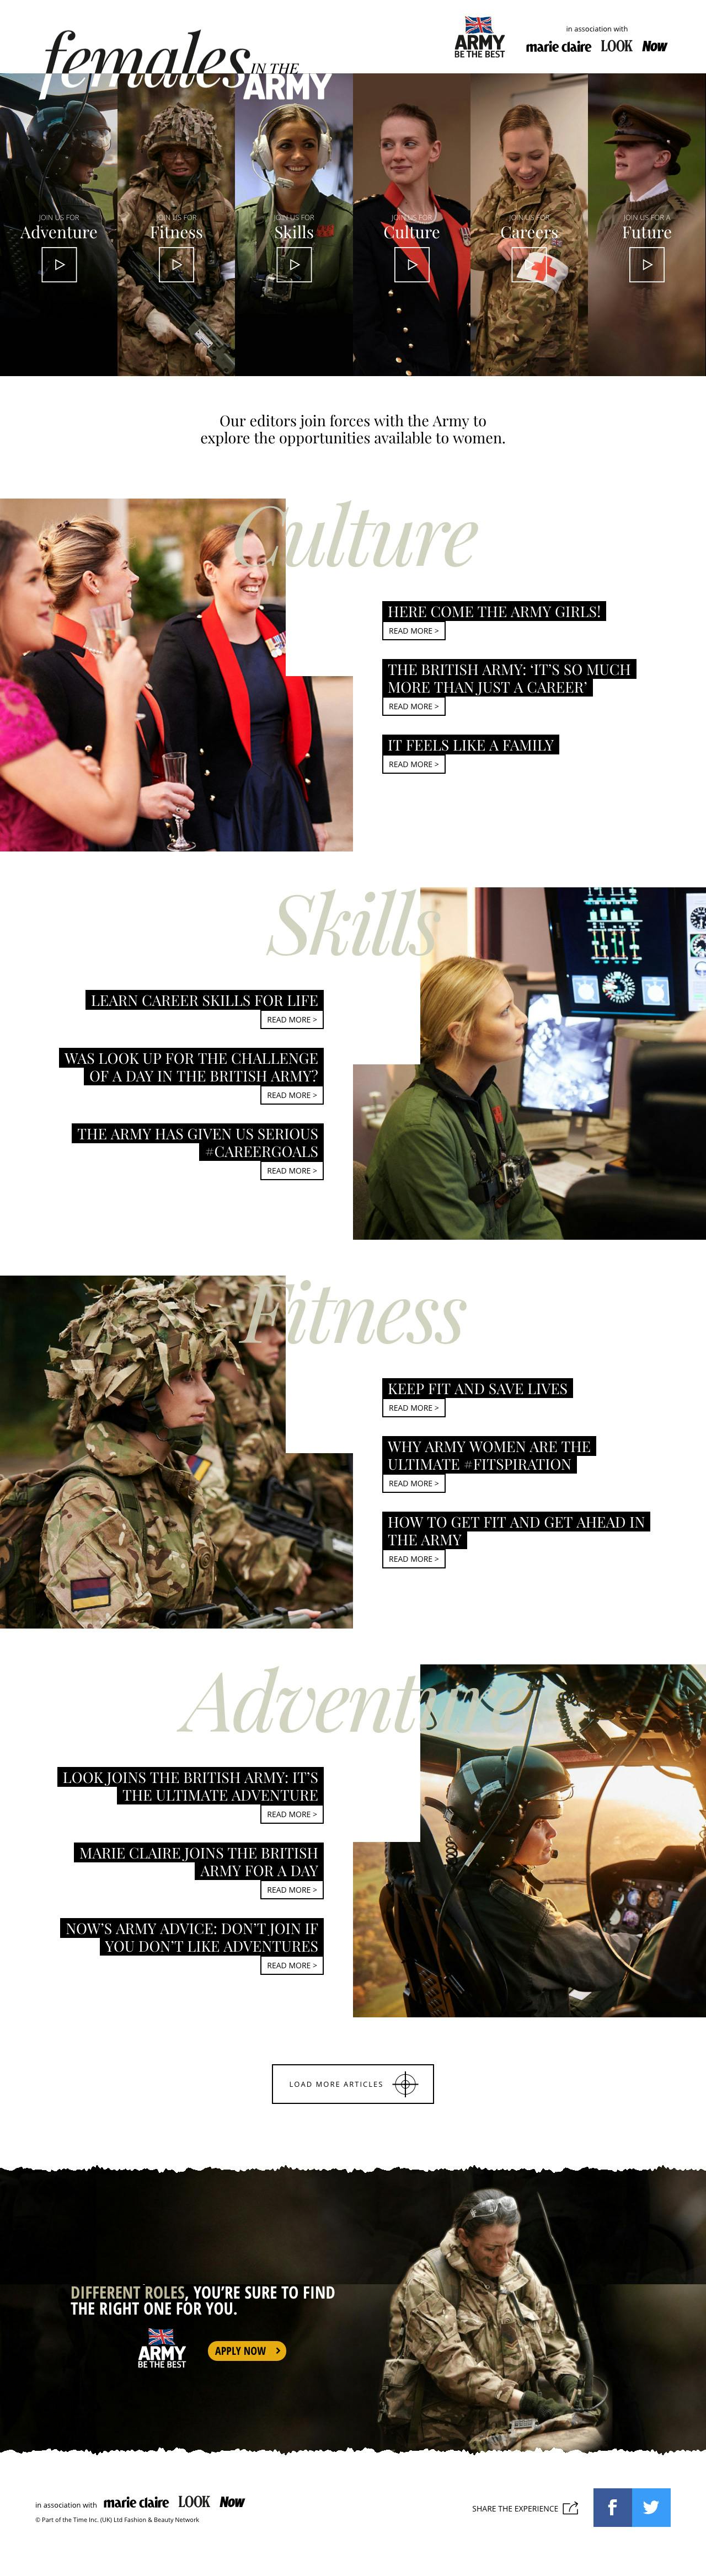 Females in the Army Website Screenshot